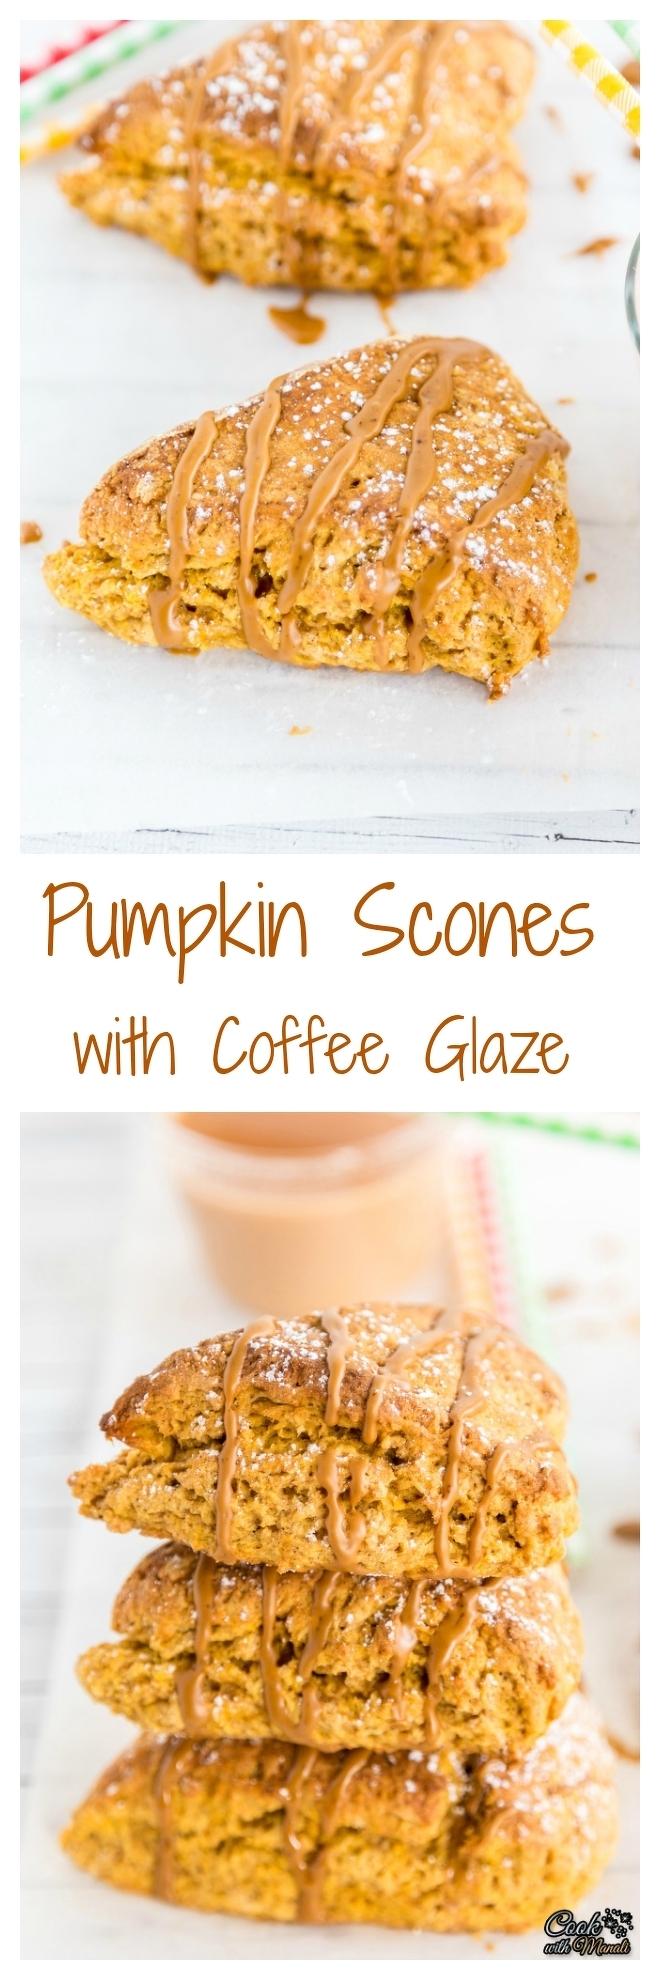 Pumpkin Scones with Coffee Glaze Collage-nocwm